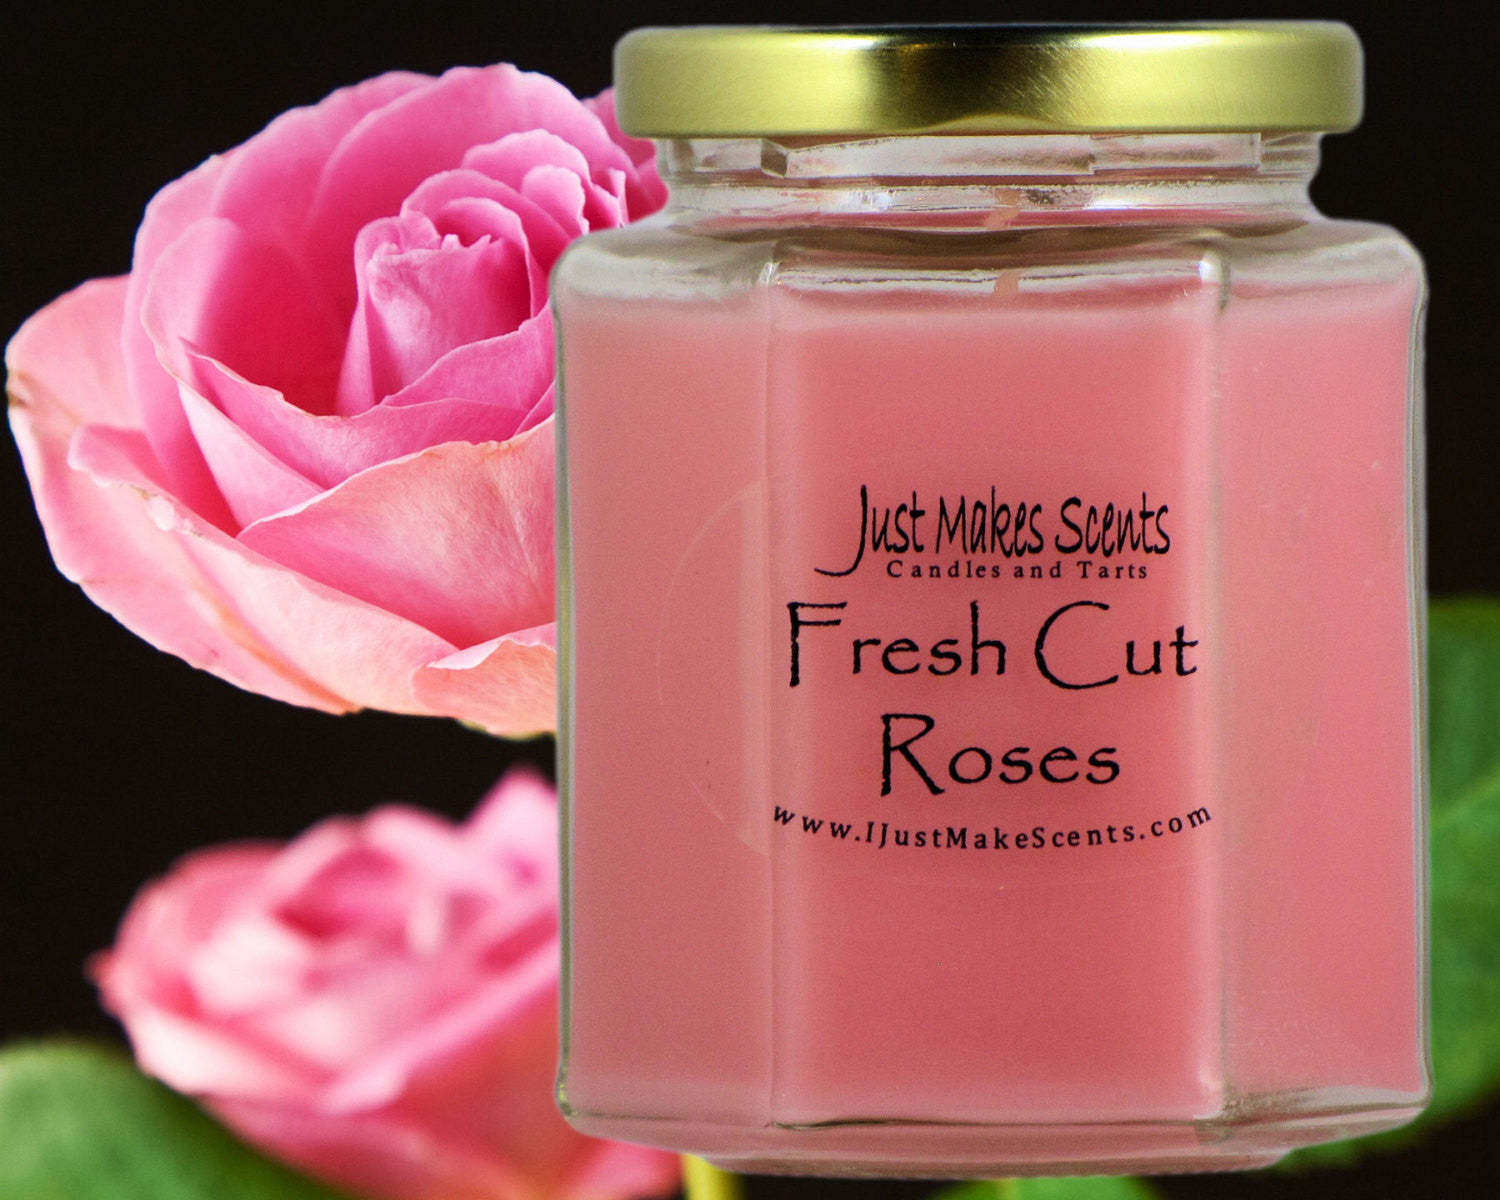 Yankee Candles Fresh Cut Roses - Reviews